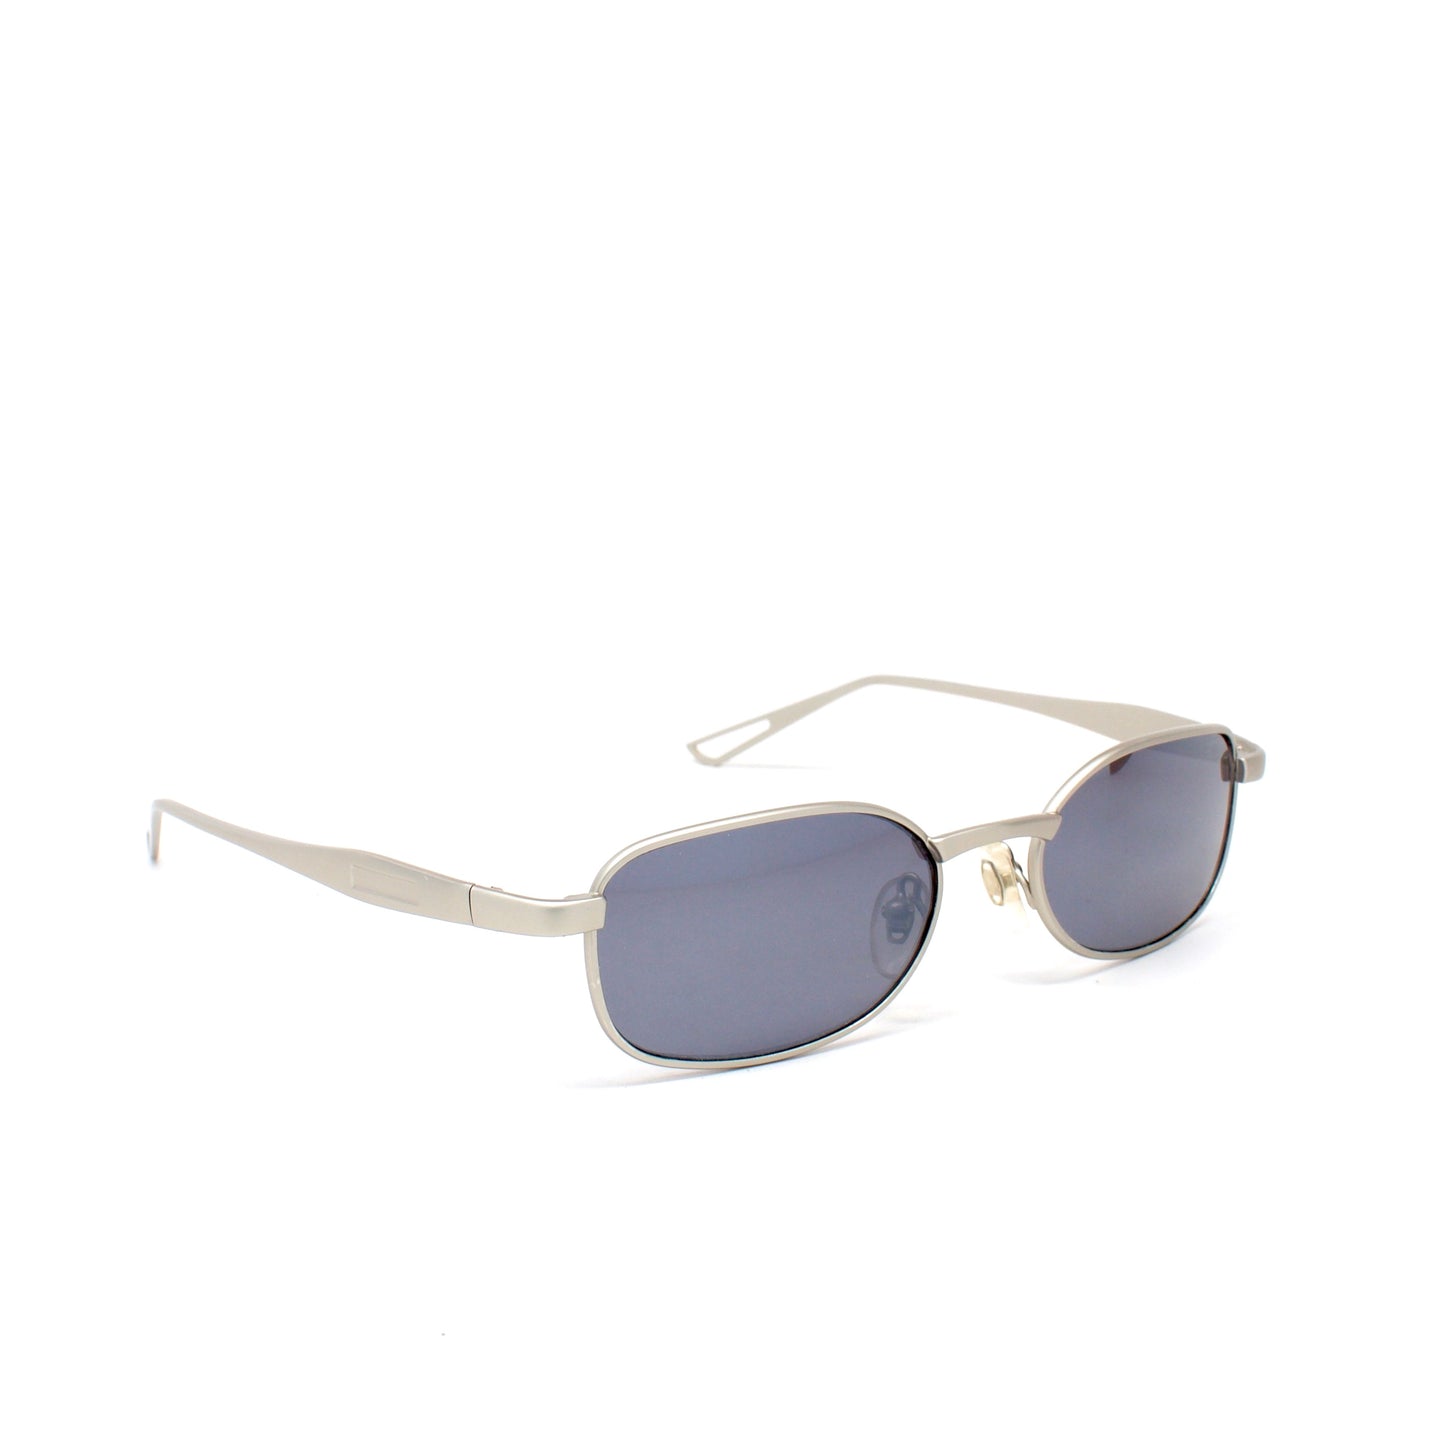 Vintage Small Size 1990s Matrix Style Rectangle Shape Sunglasses - Light Silver